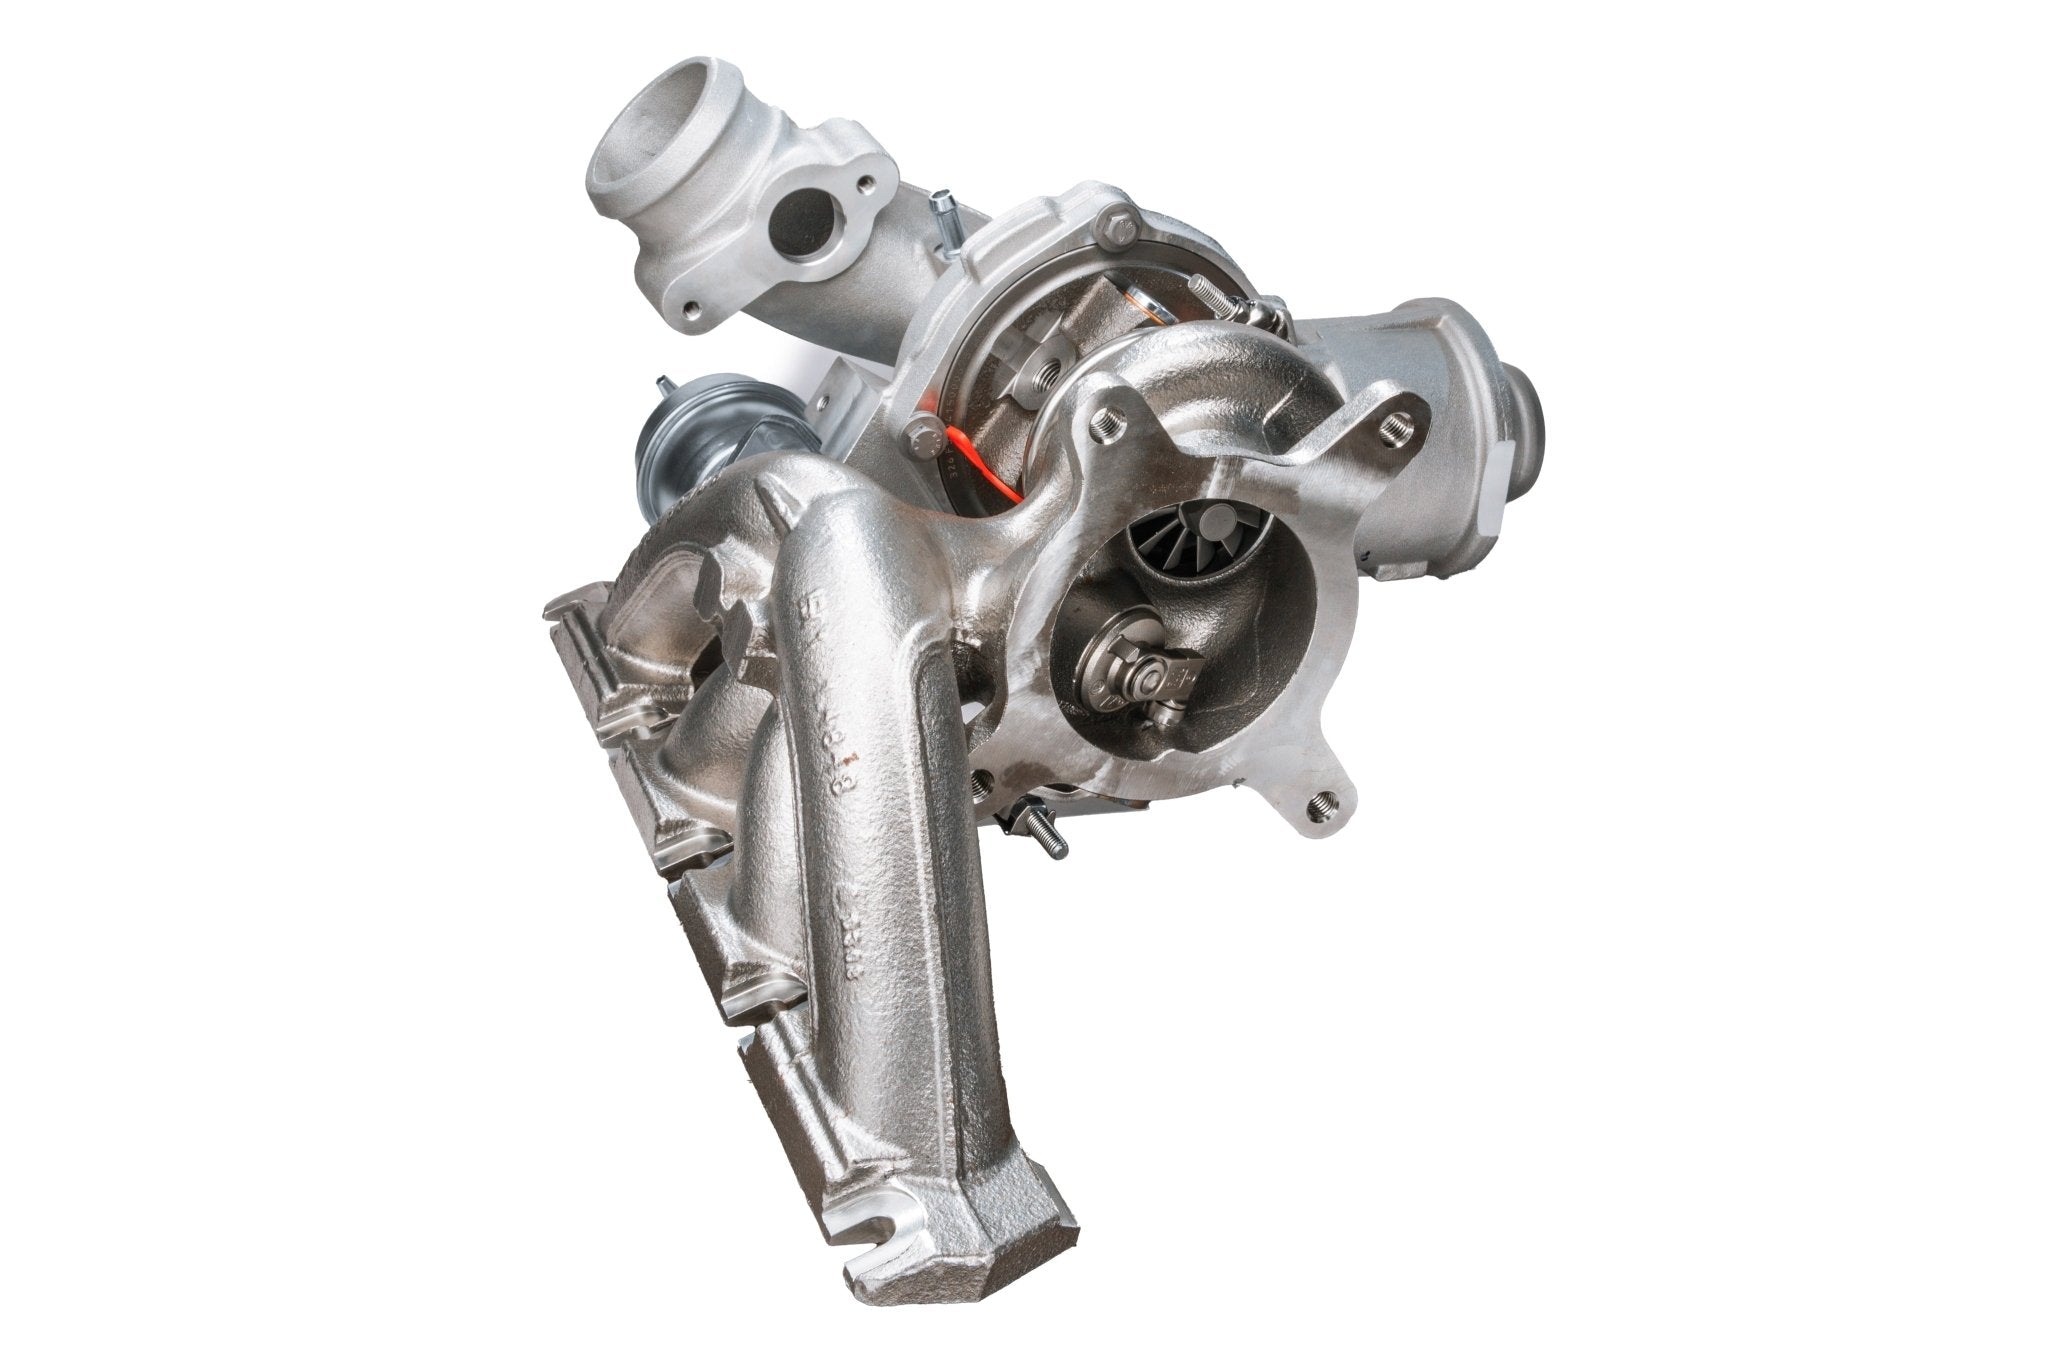 K04-064 Turbocharger for Audi A4 / A5 - 1.8 / 2.0 TFSI EA888 Gen 2 - Semi Bolt-On - RTMG Performance